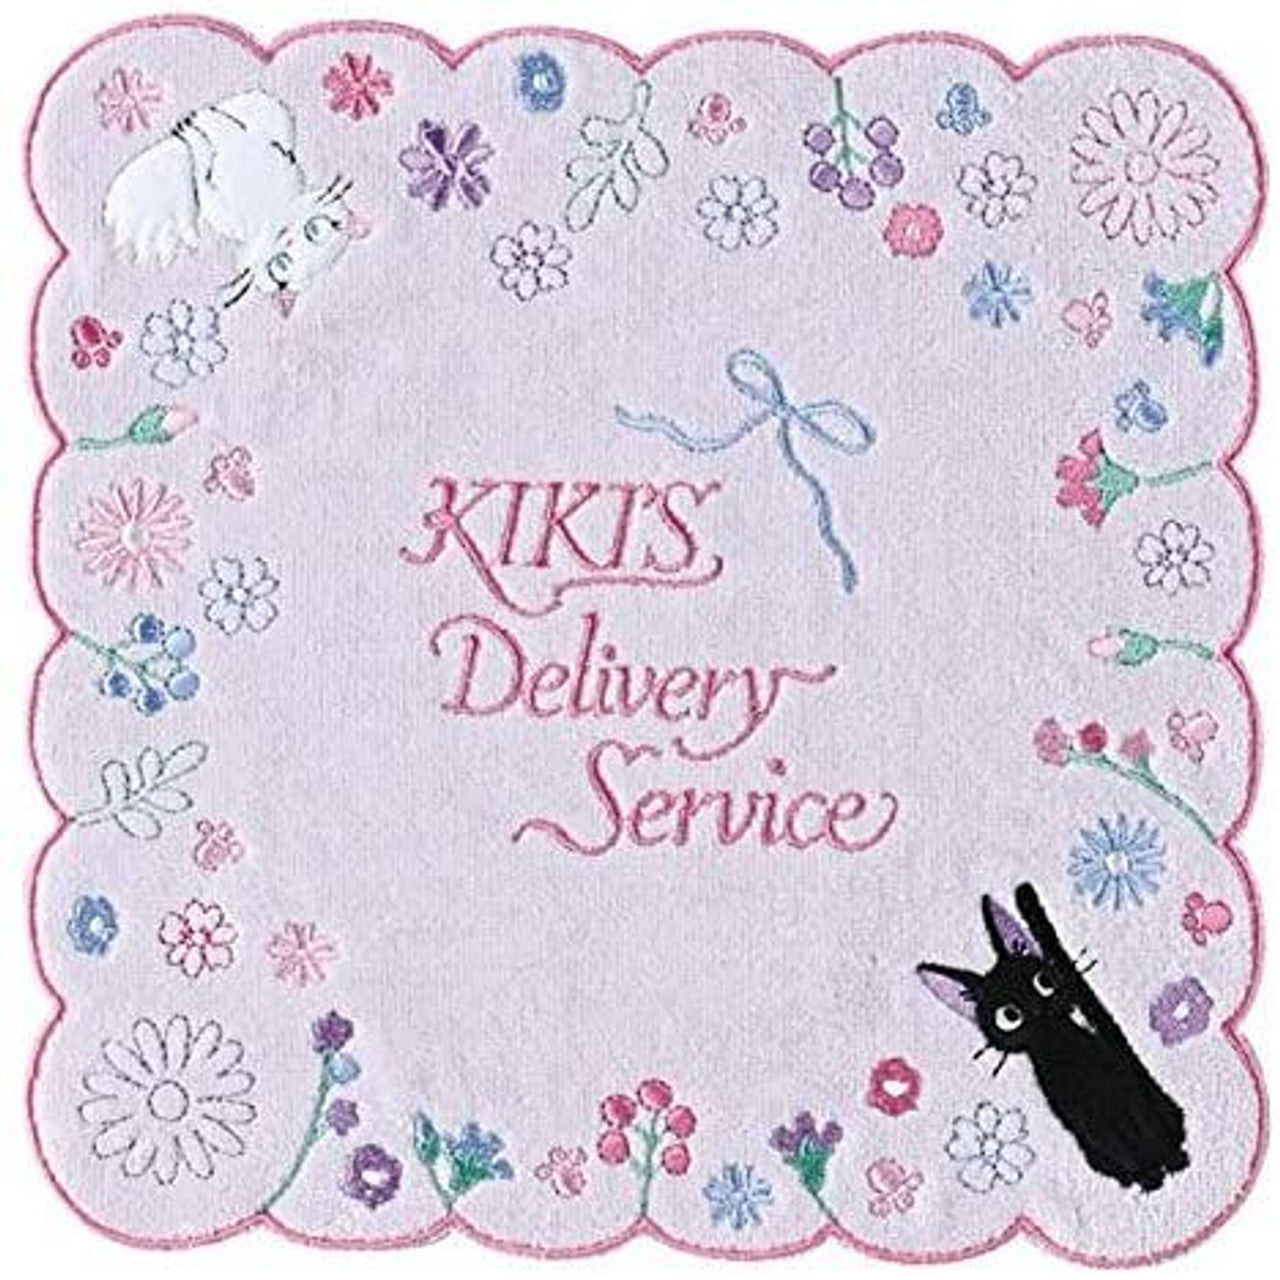 Kiki Delivery Service Mini Towel 03